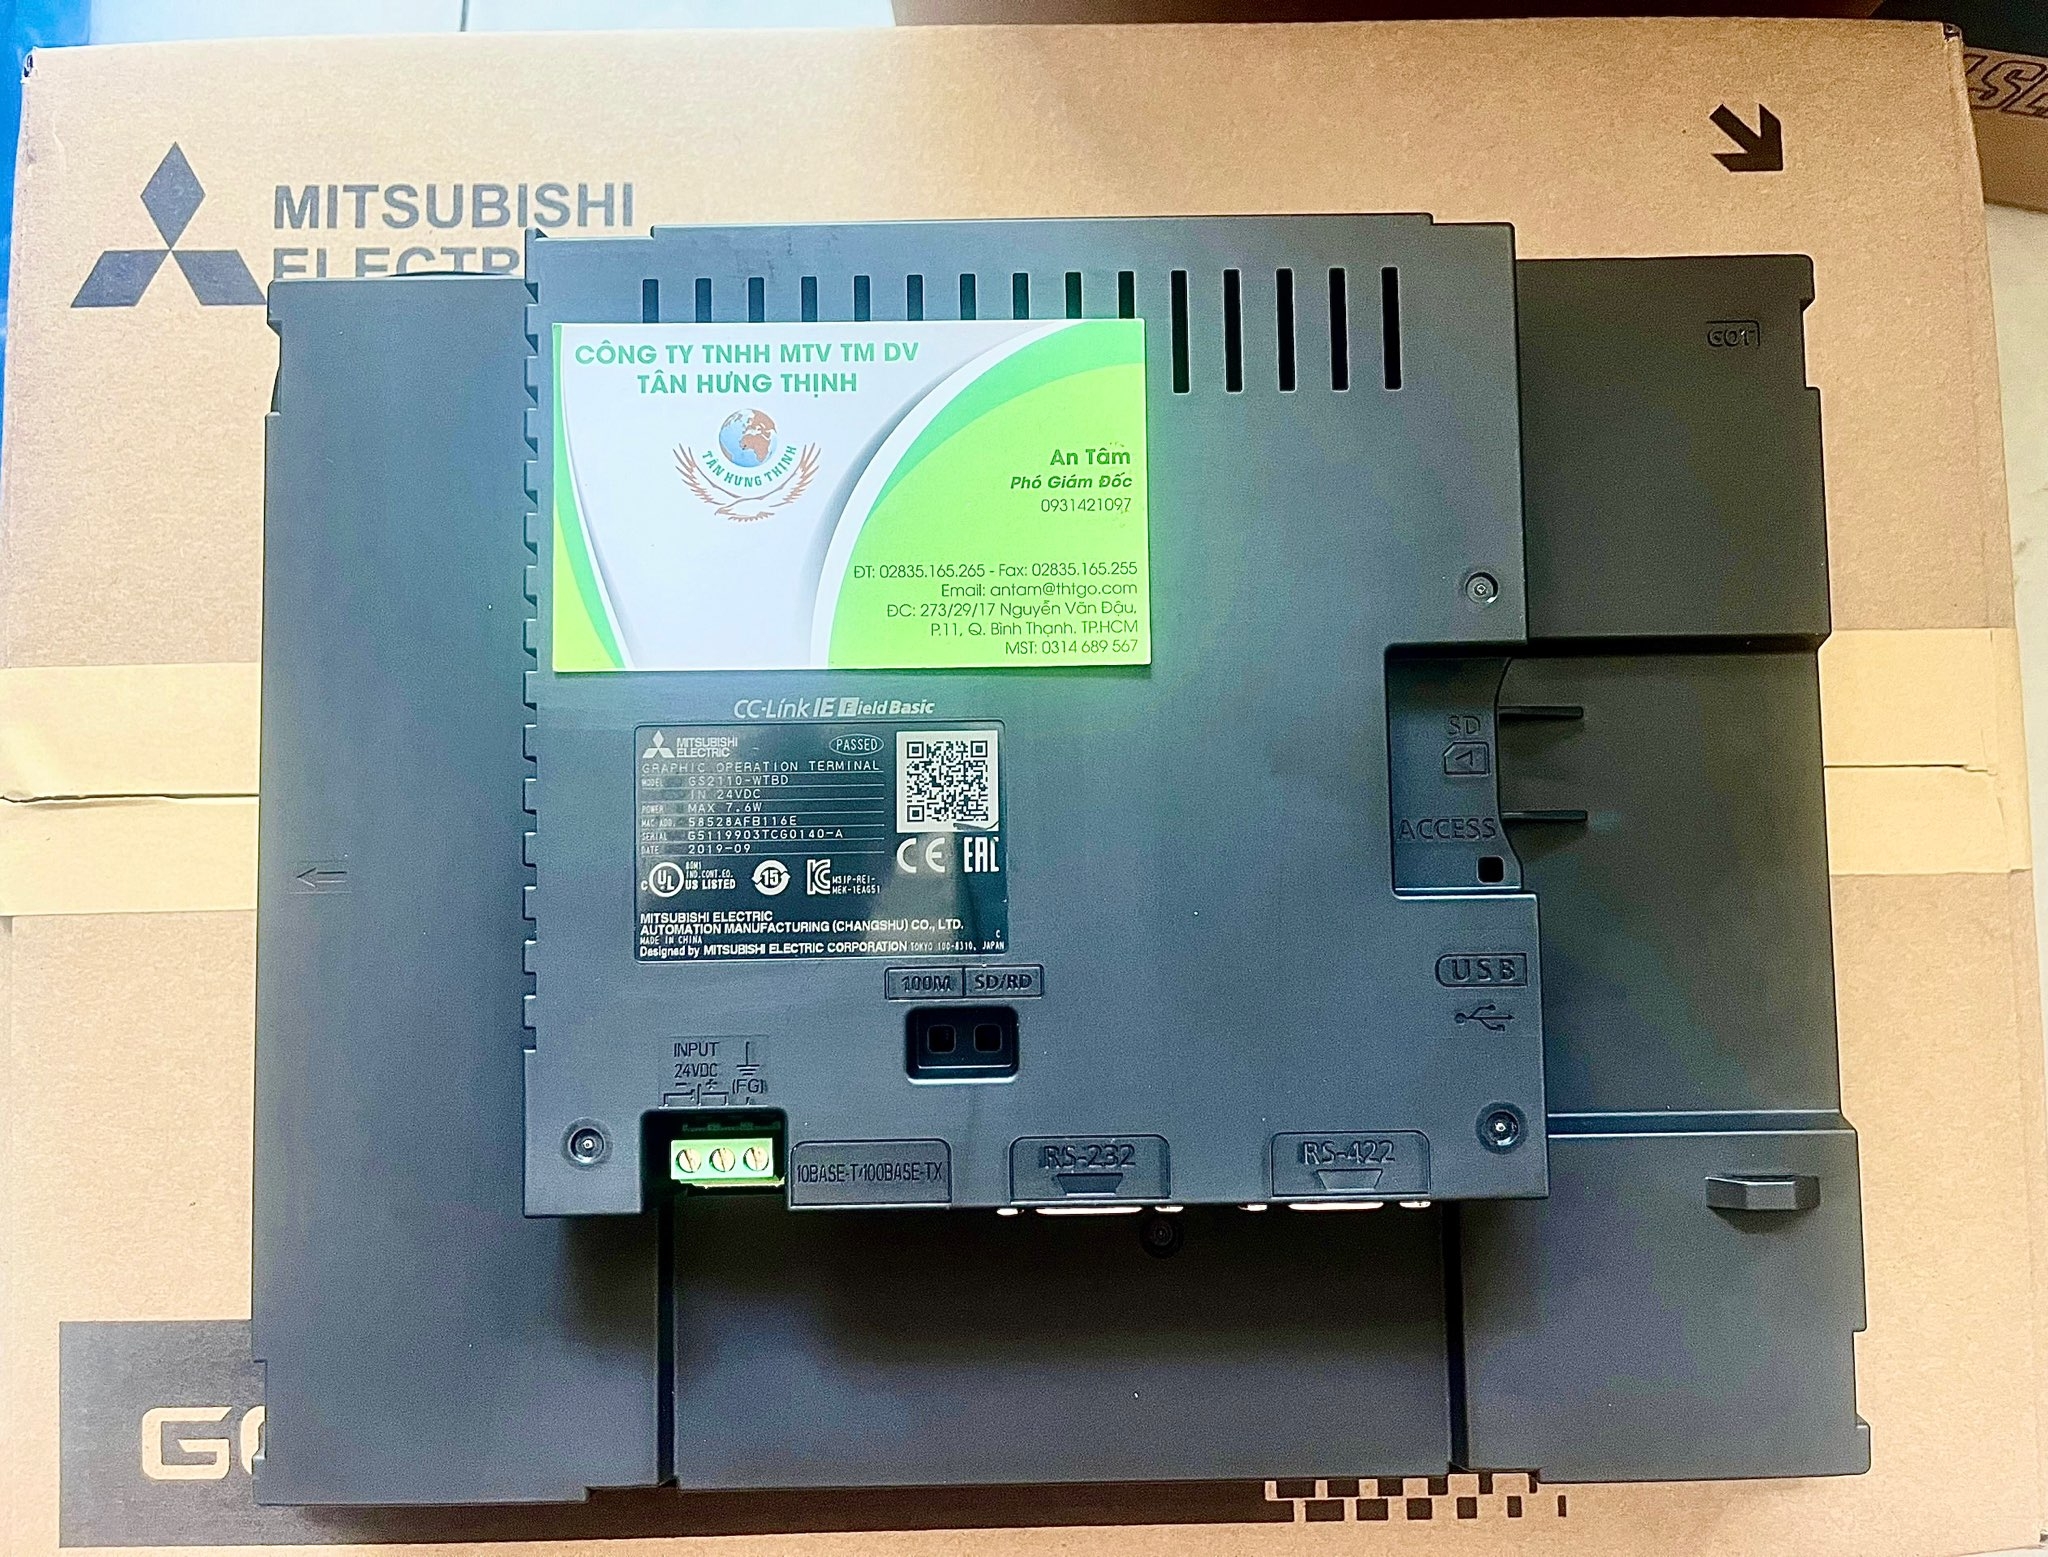 MITSUBISHI ELECTRIC GRAPHIC GS2110-WTBD